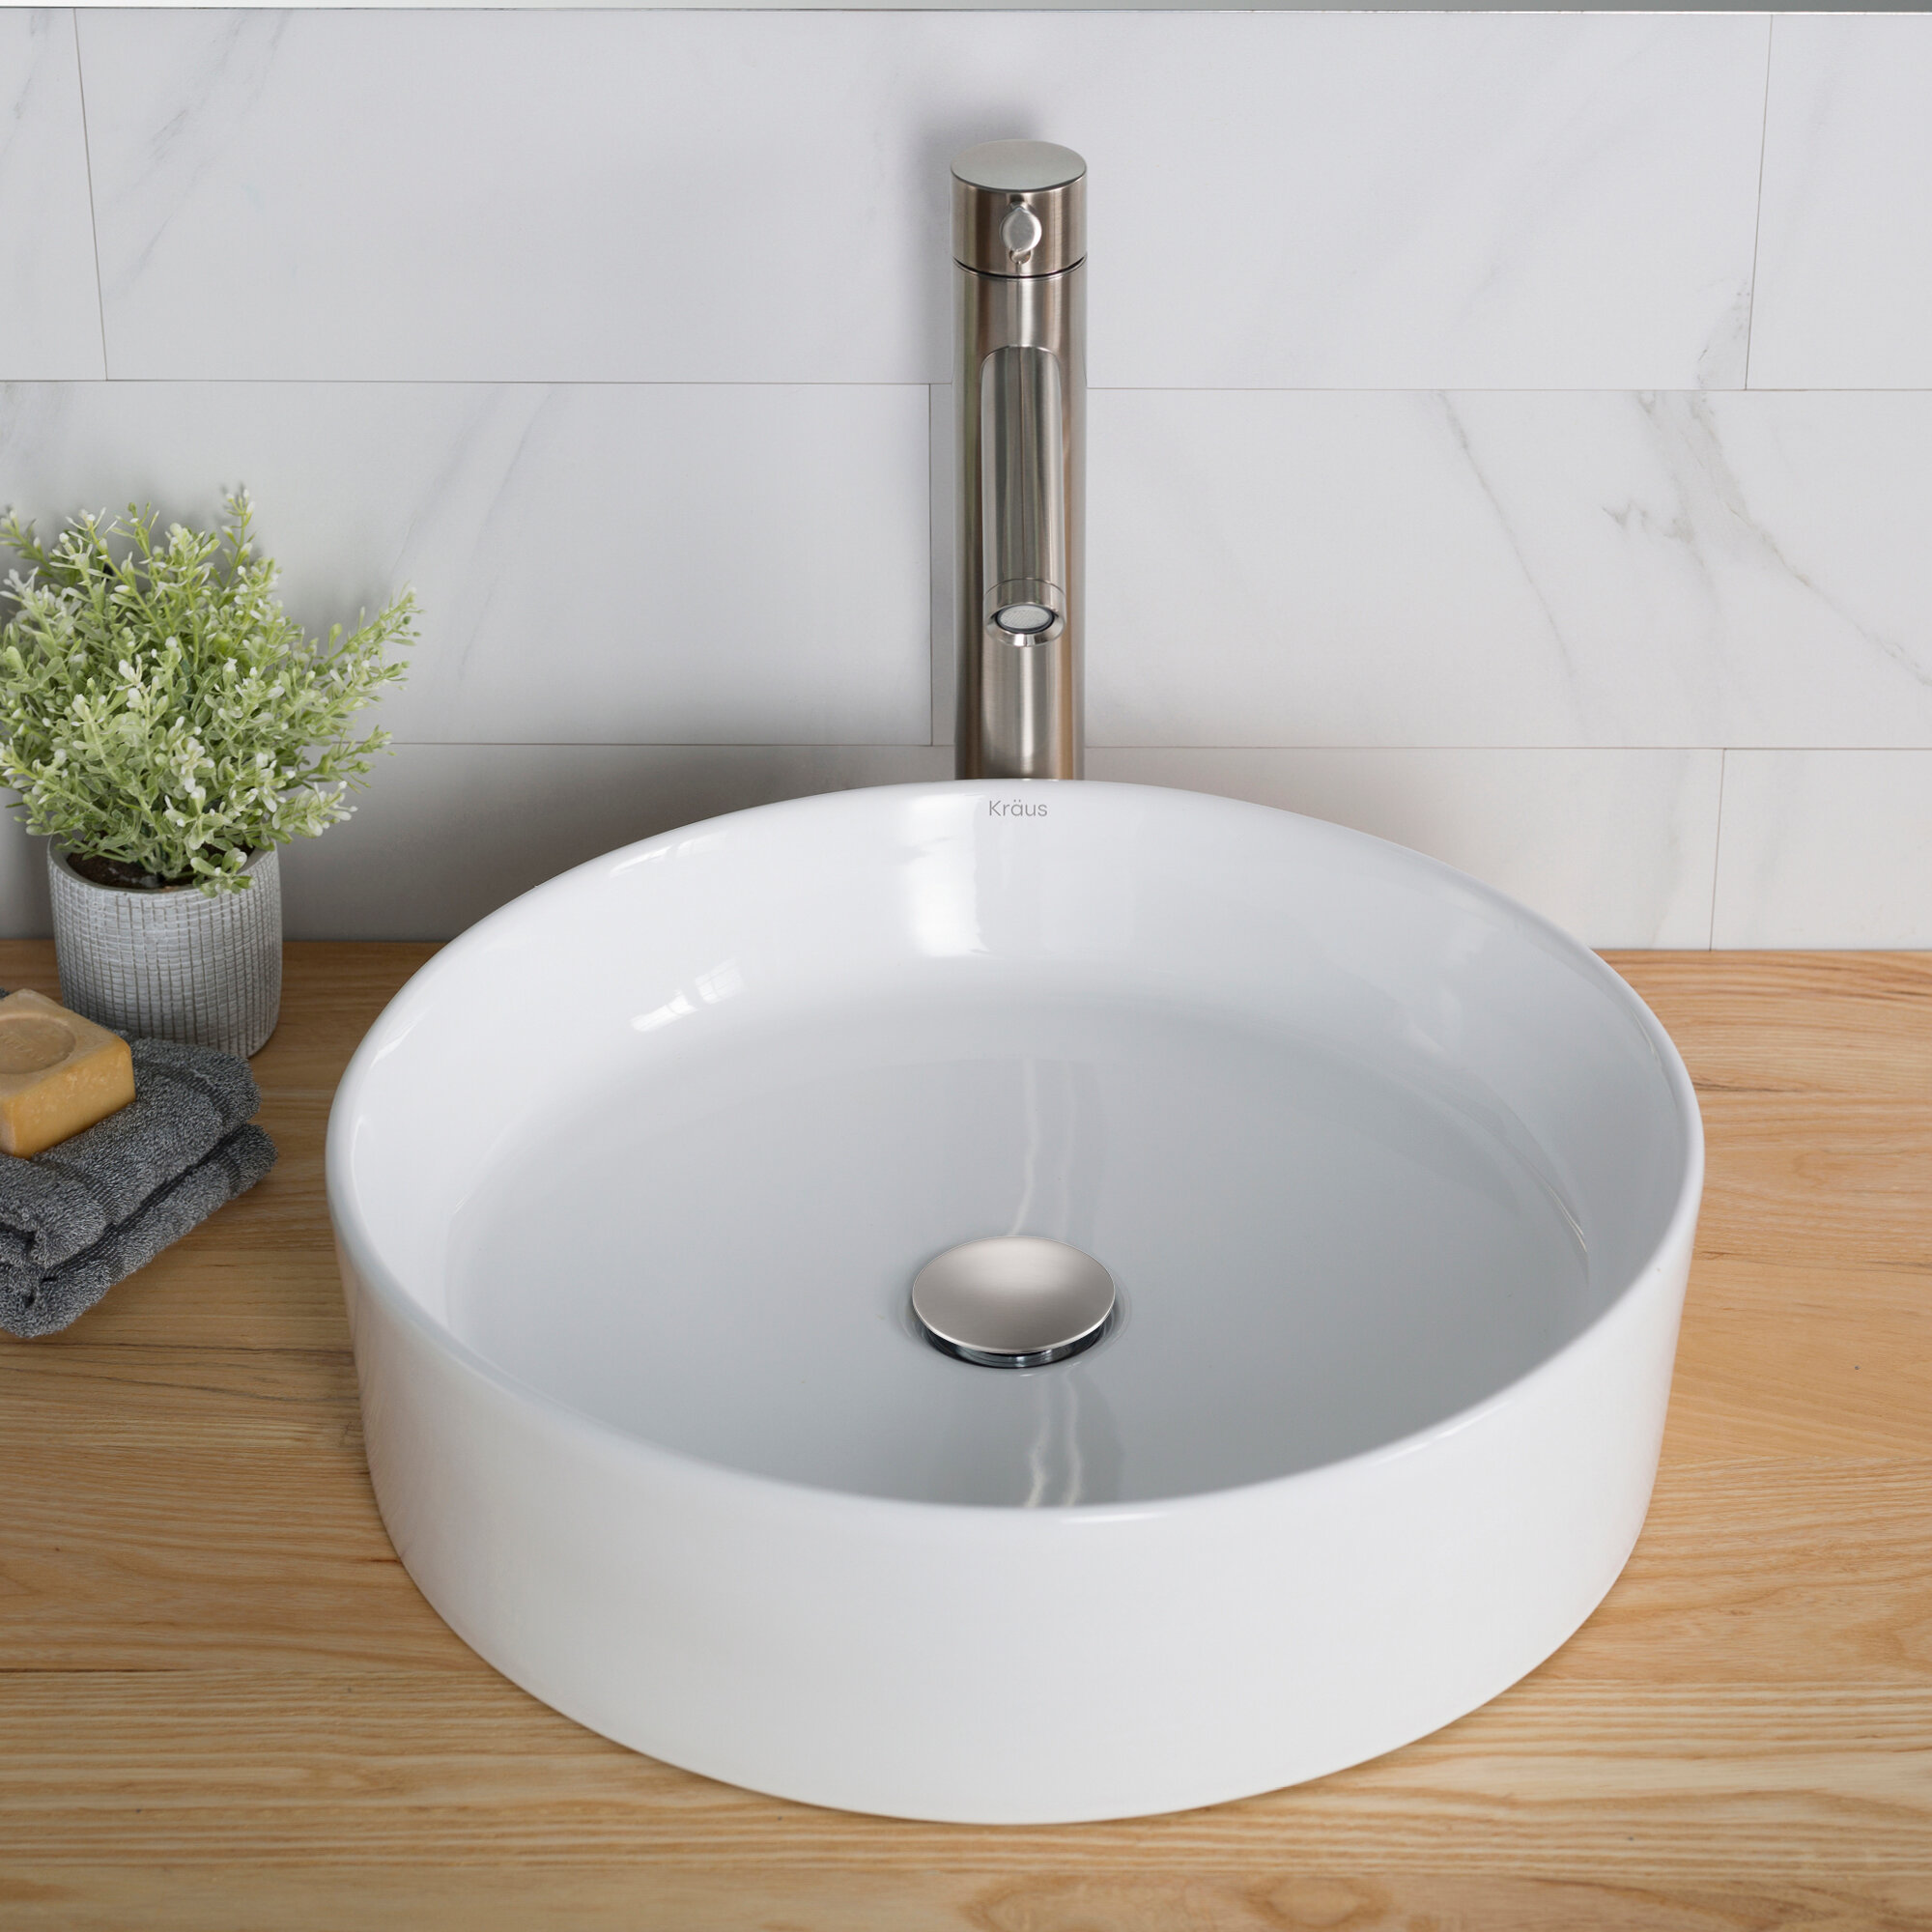 Ceramic Ceramic Circular Vessel Bathroom Sink With Faucet